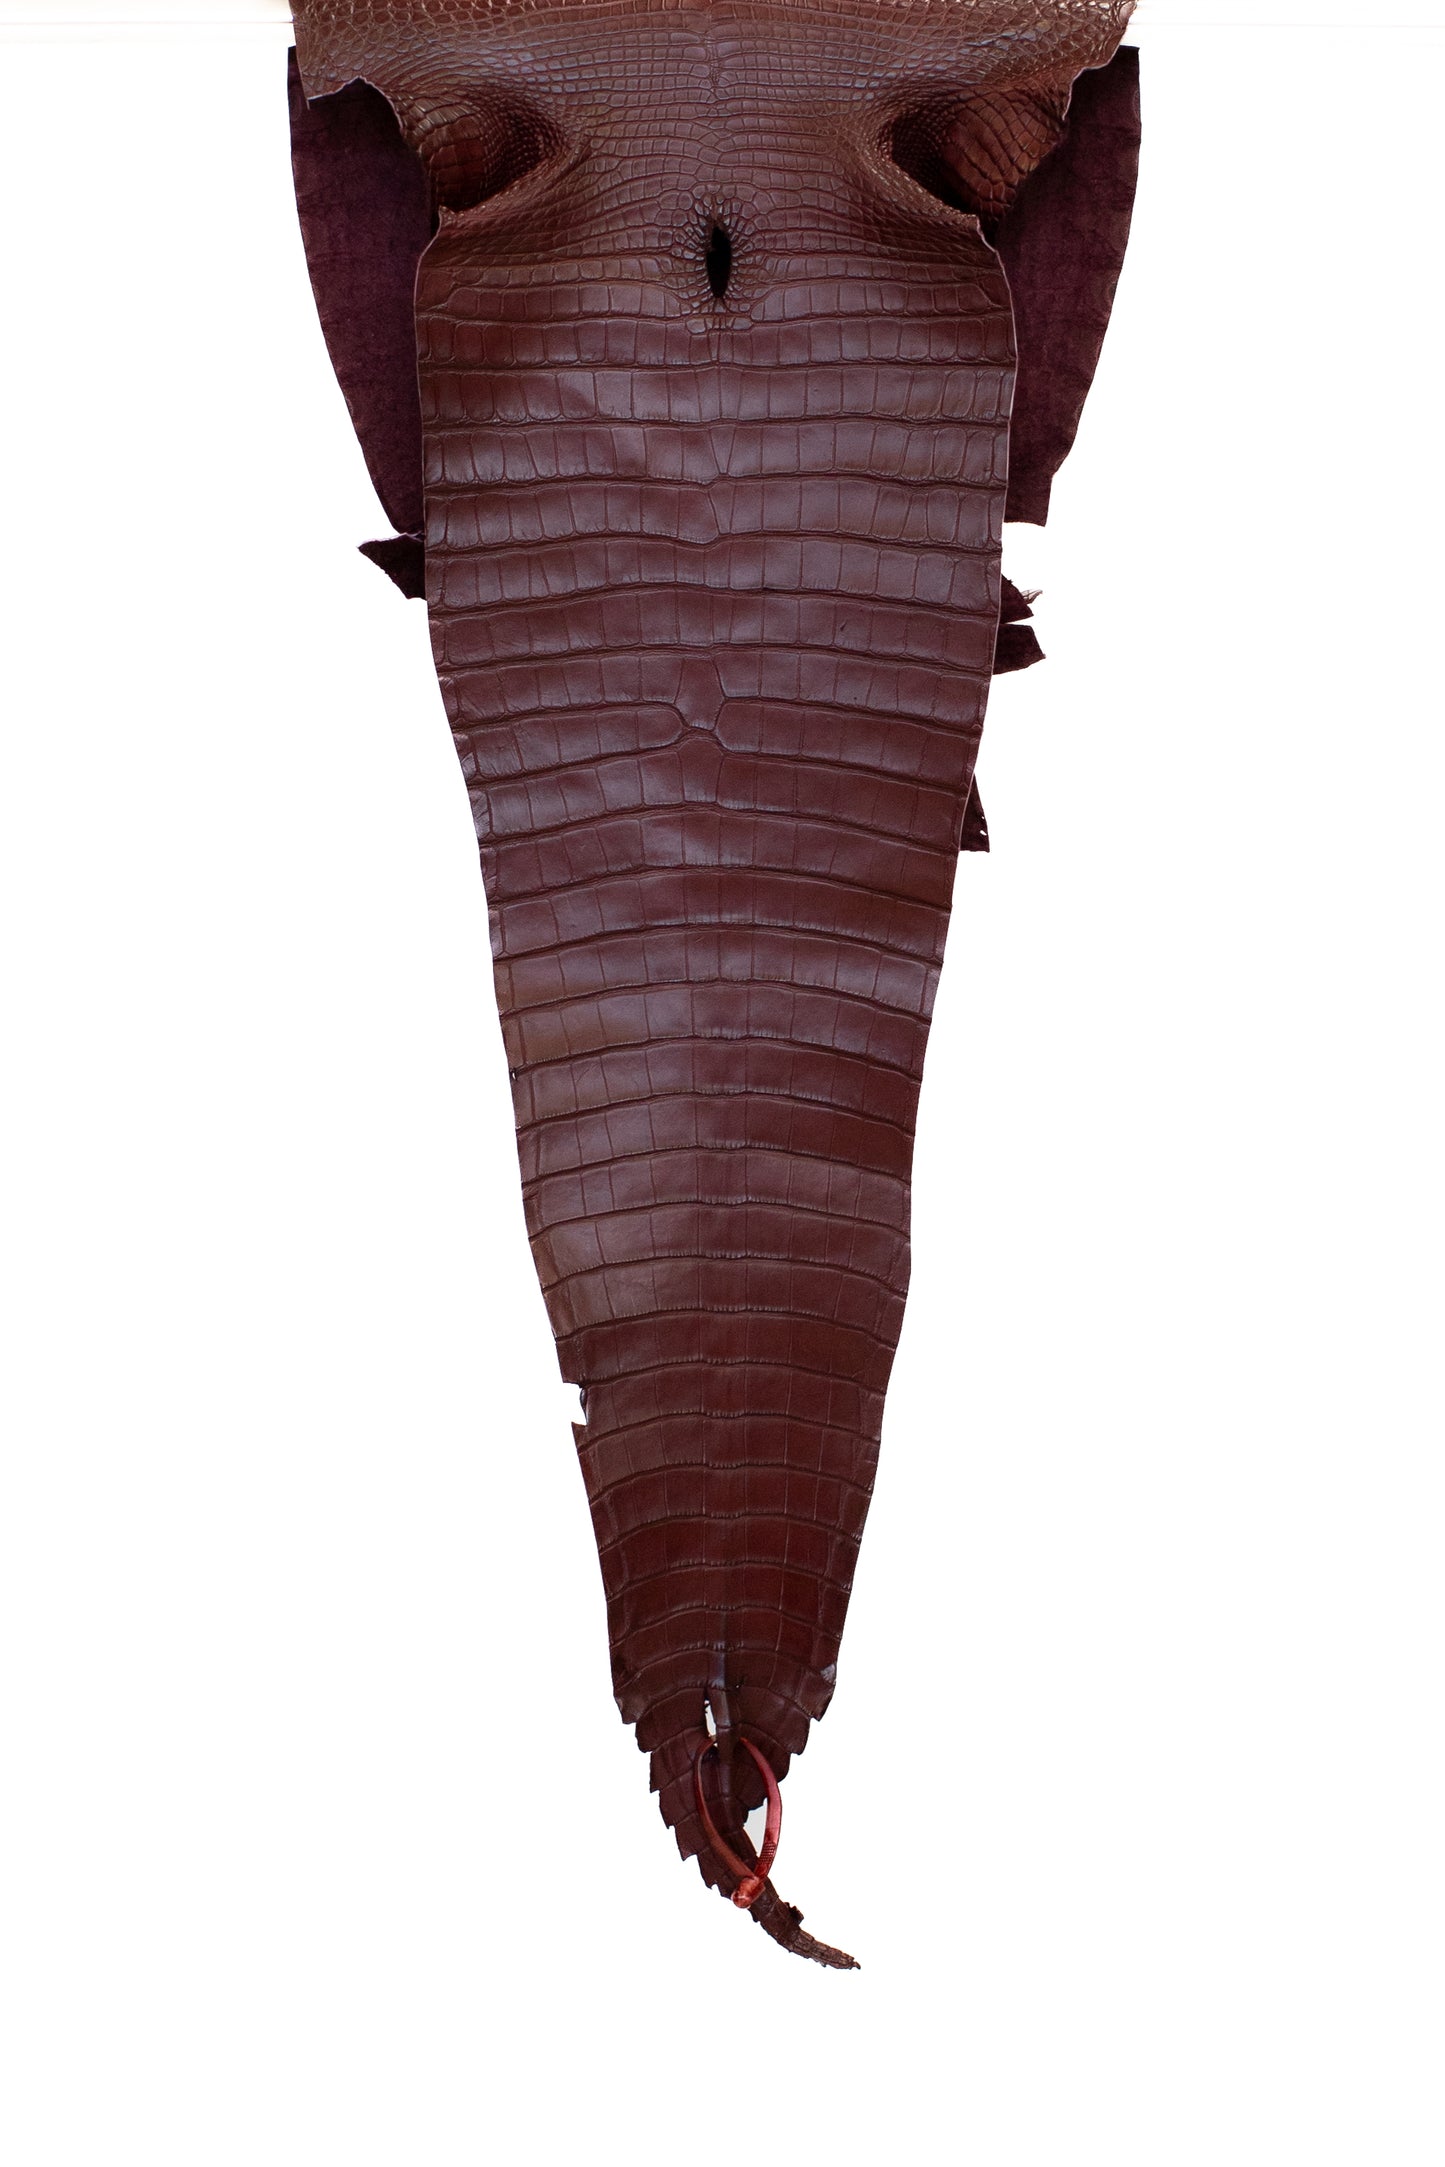 39 cm Grade 1/2 Bordeaux Matte Farm Raised American Alligator Leather - Tag: FL18-0034616